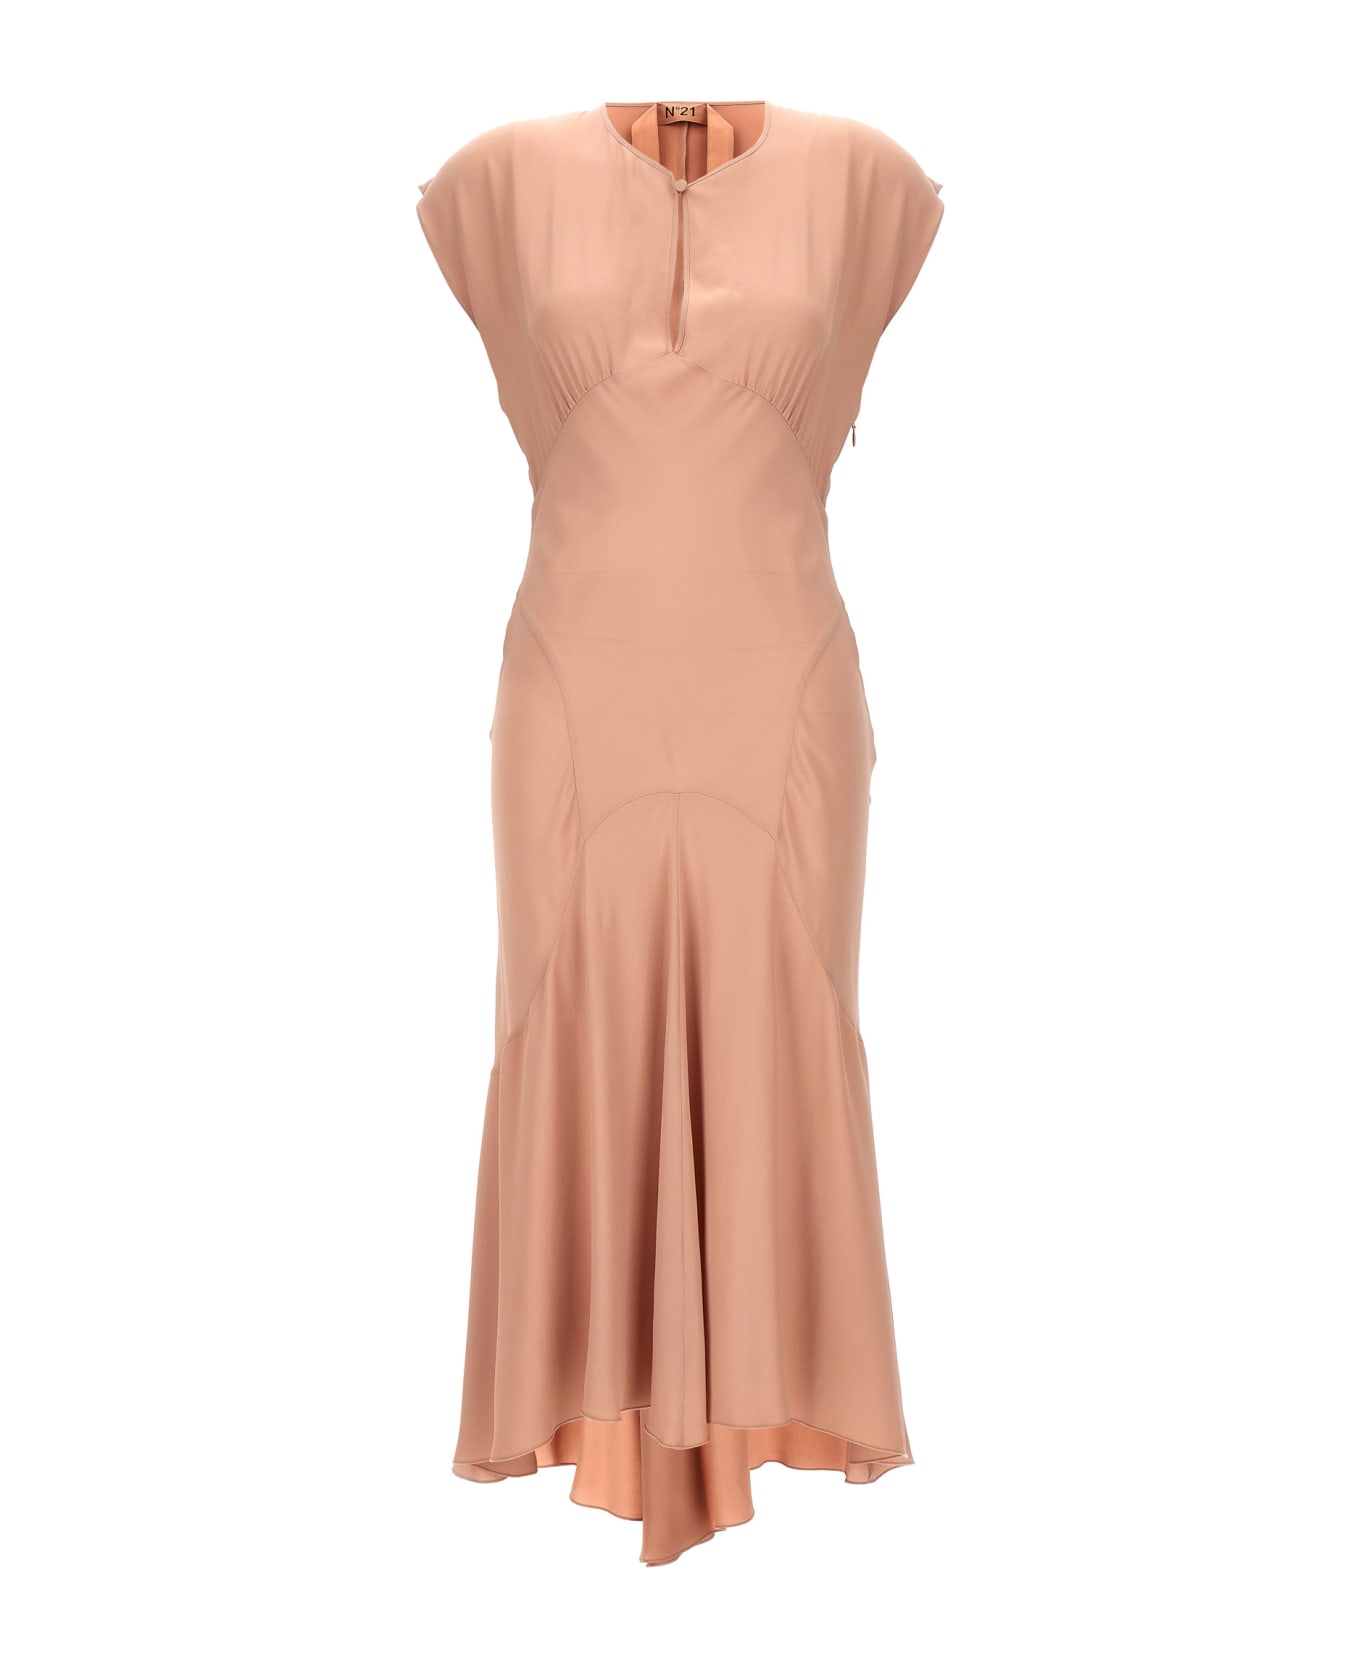 N.21 Crepe Midi Dress - Pink